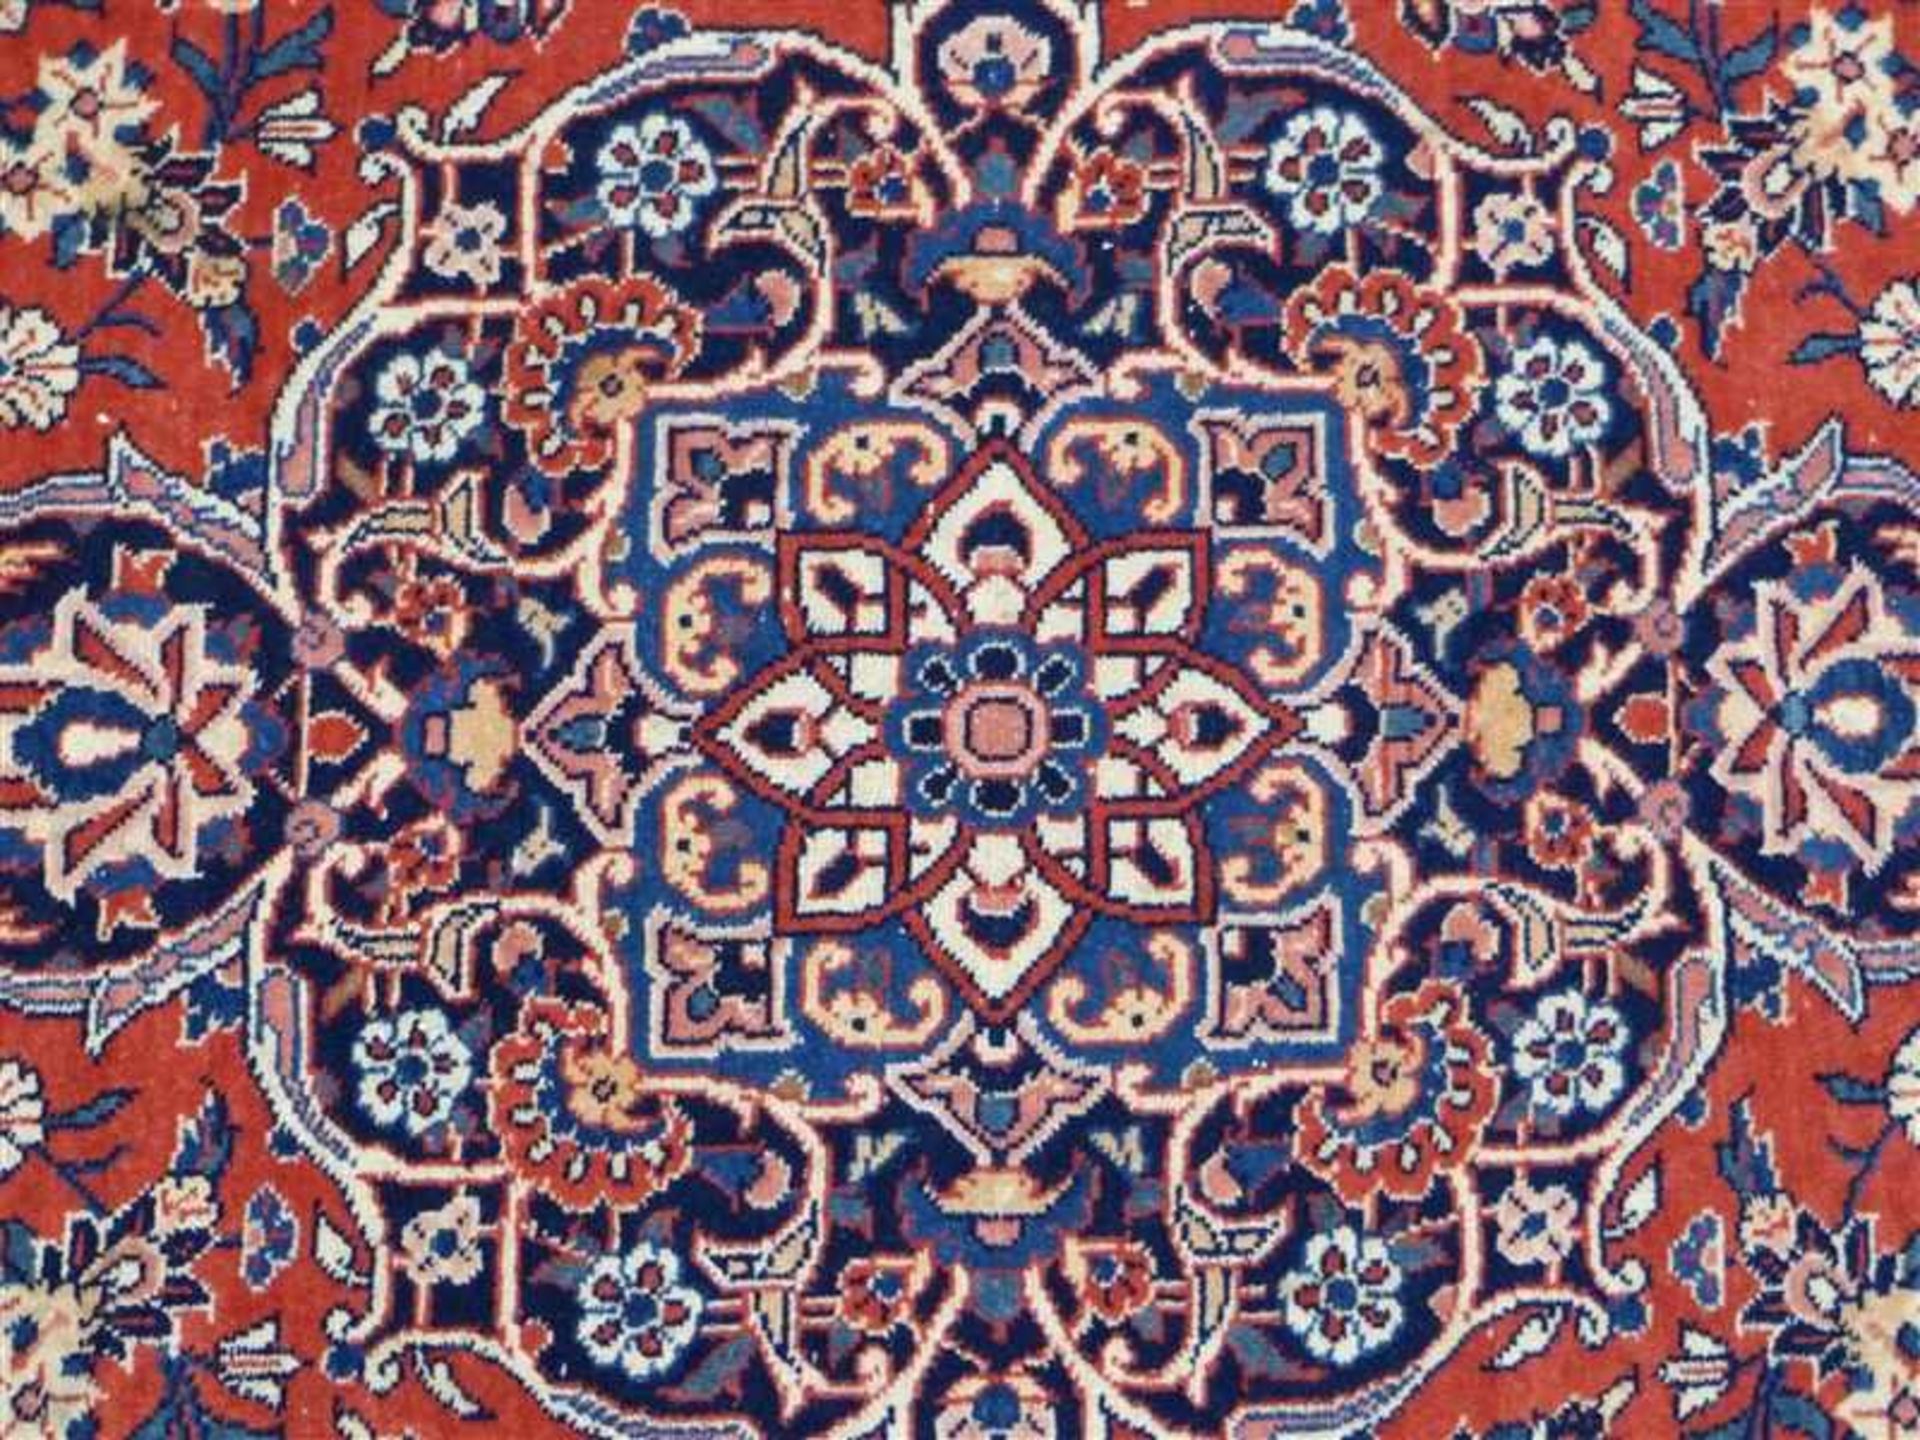 Keshan Brückeblau-rot grundig, florares Muster, Mittelmedaillon, Randbeschädigung, 205x140 cm, - Bild 2 aus 4